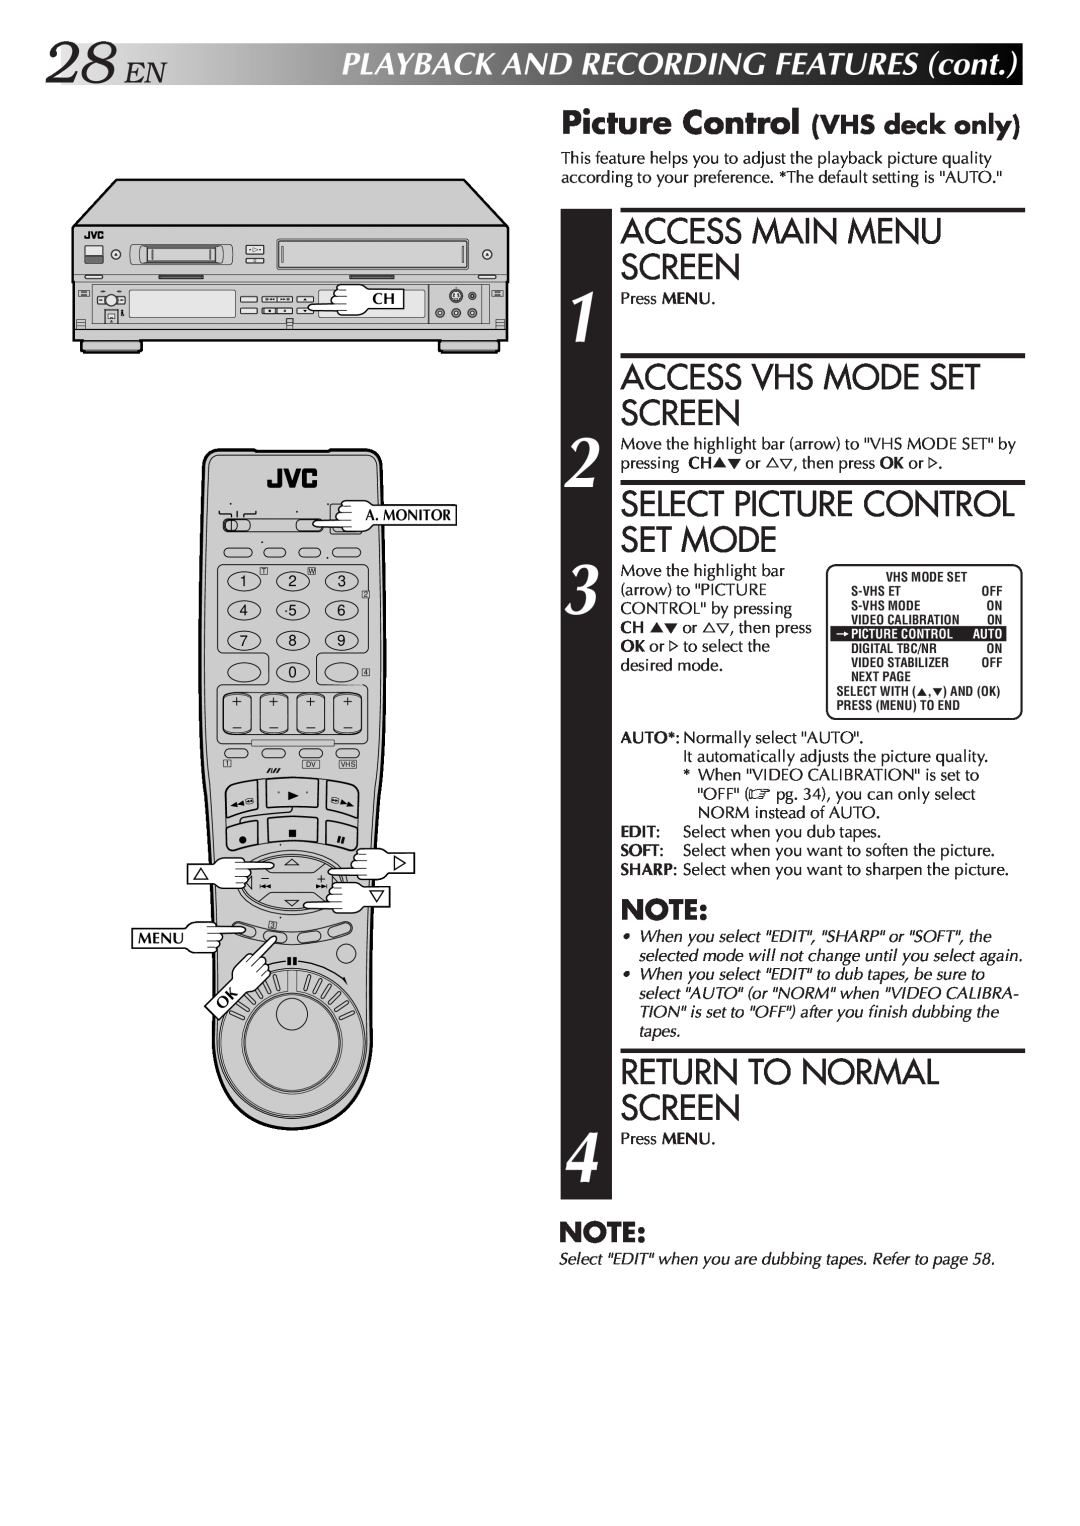 JVC SR-VS10U manual 28EN, Access Main Menu, Screen, Access Vhs Mode Set, Set Mode, Picture Control VHS deck only 